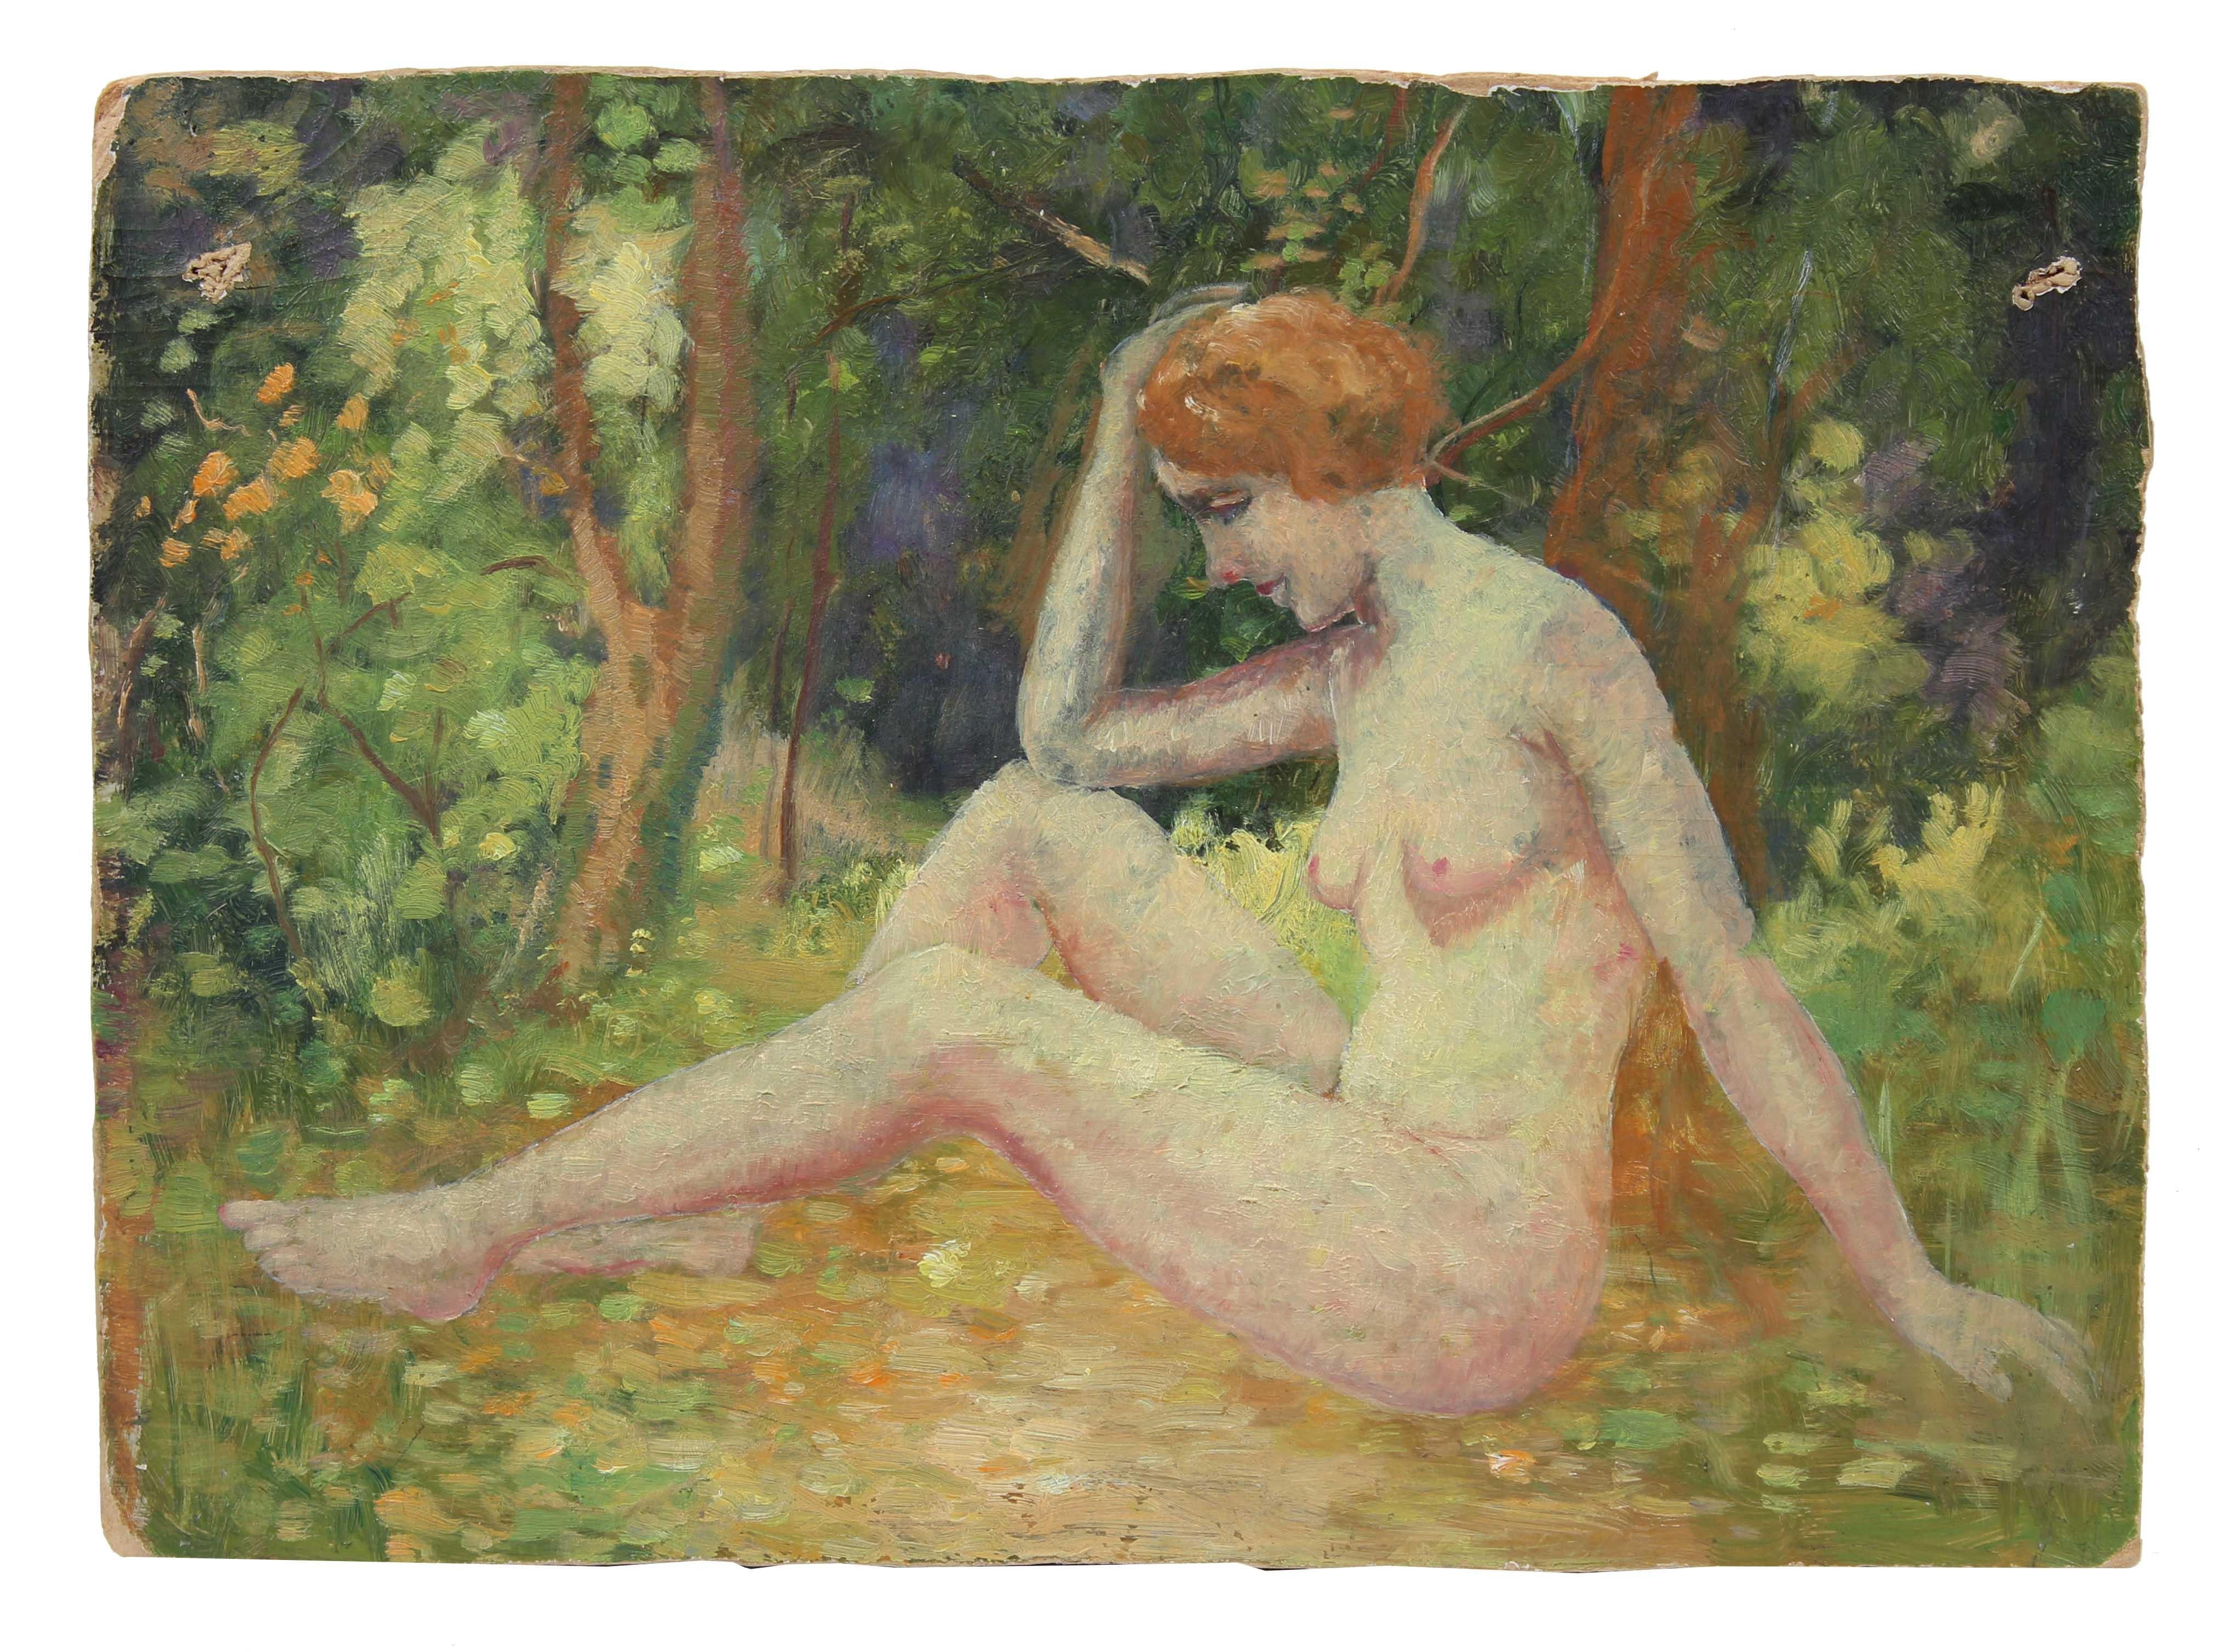 Duncan Davidson Landscape Painting - Impressionist Female Figure in a Landscape, Oil Painting, Circa 1900-1930s